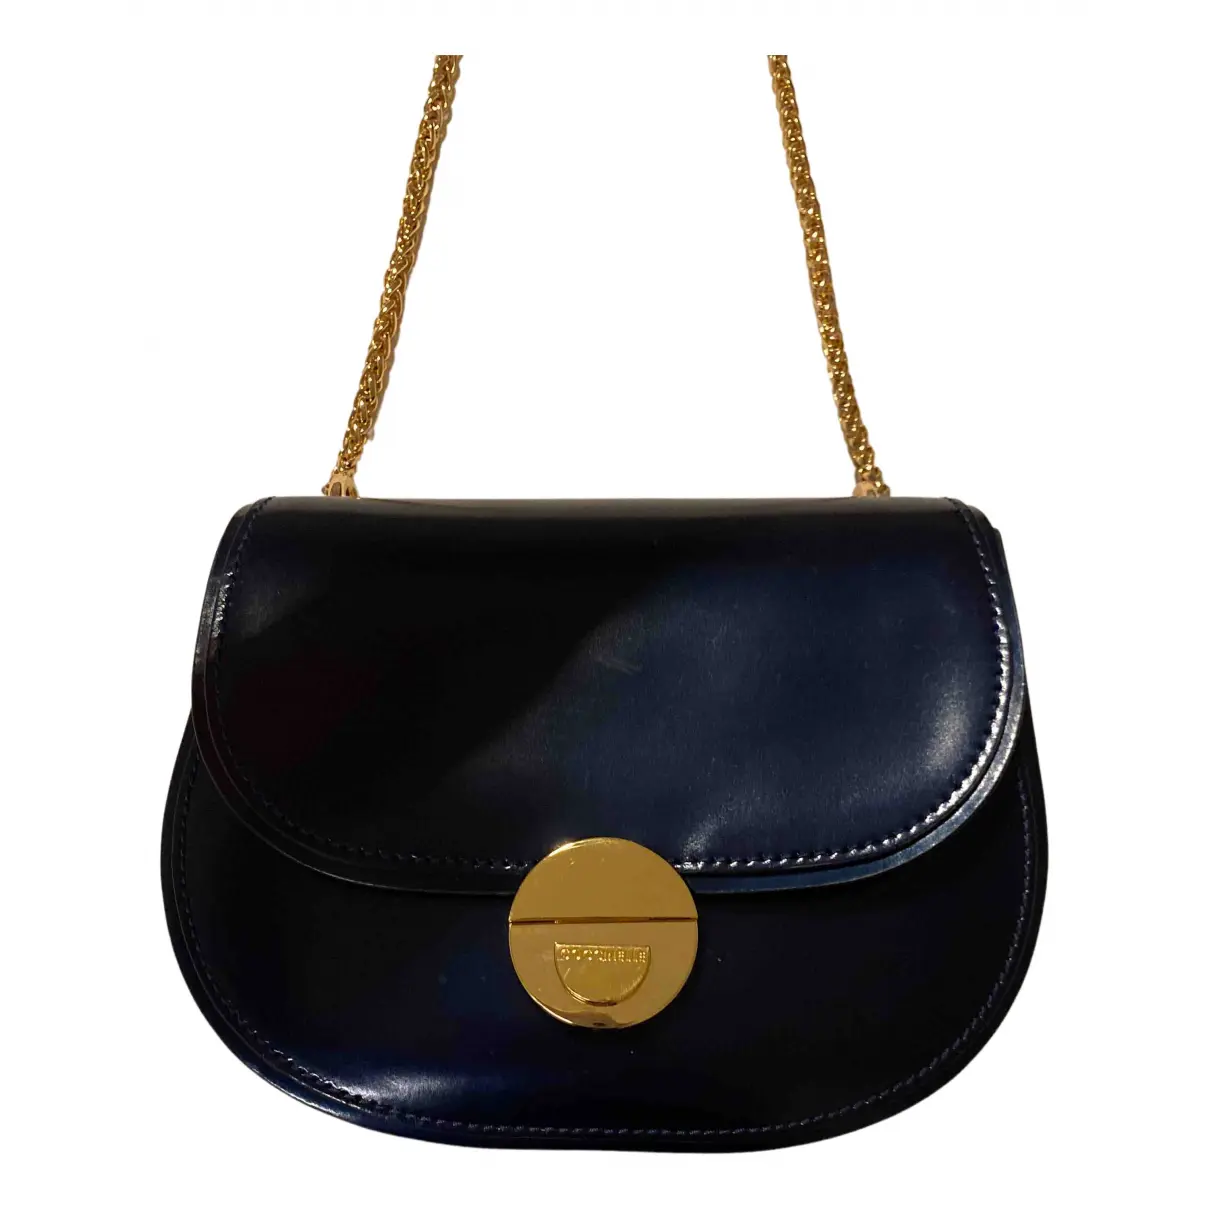 Patent leather handbag Coccinelle